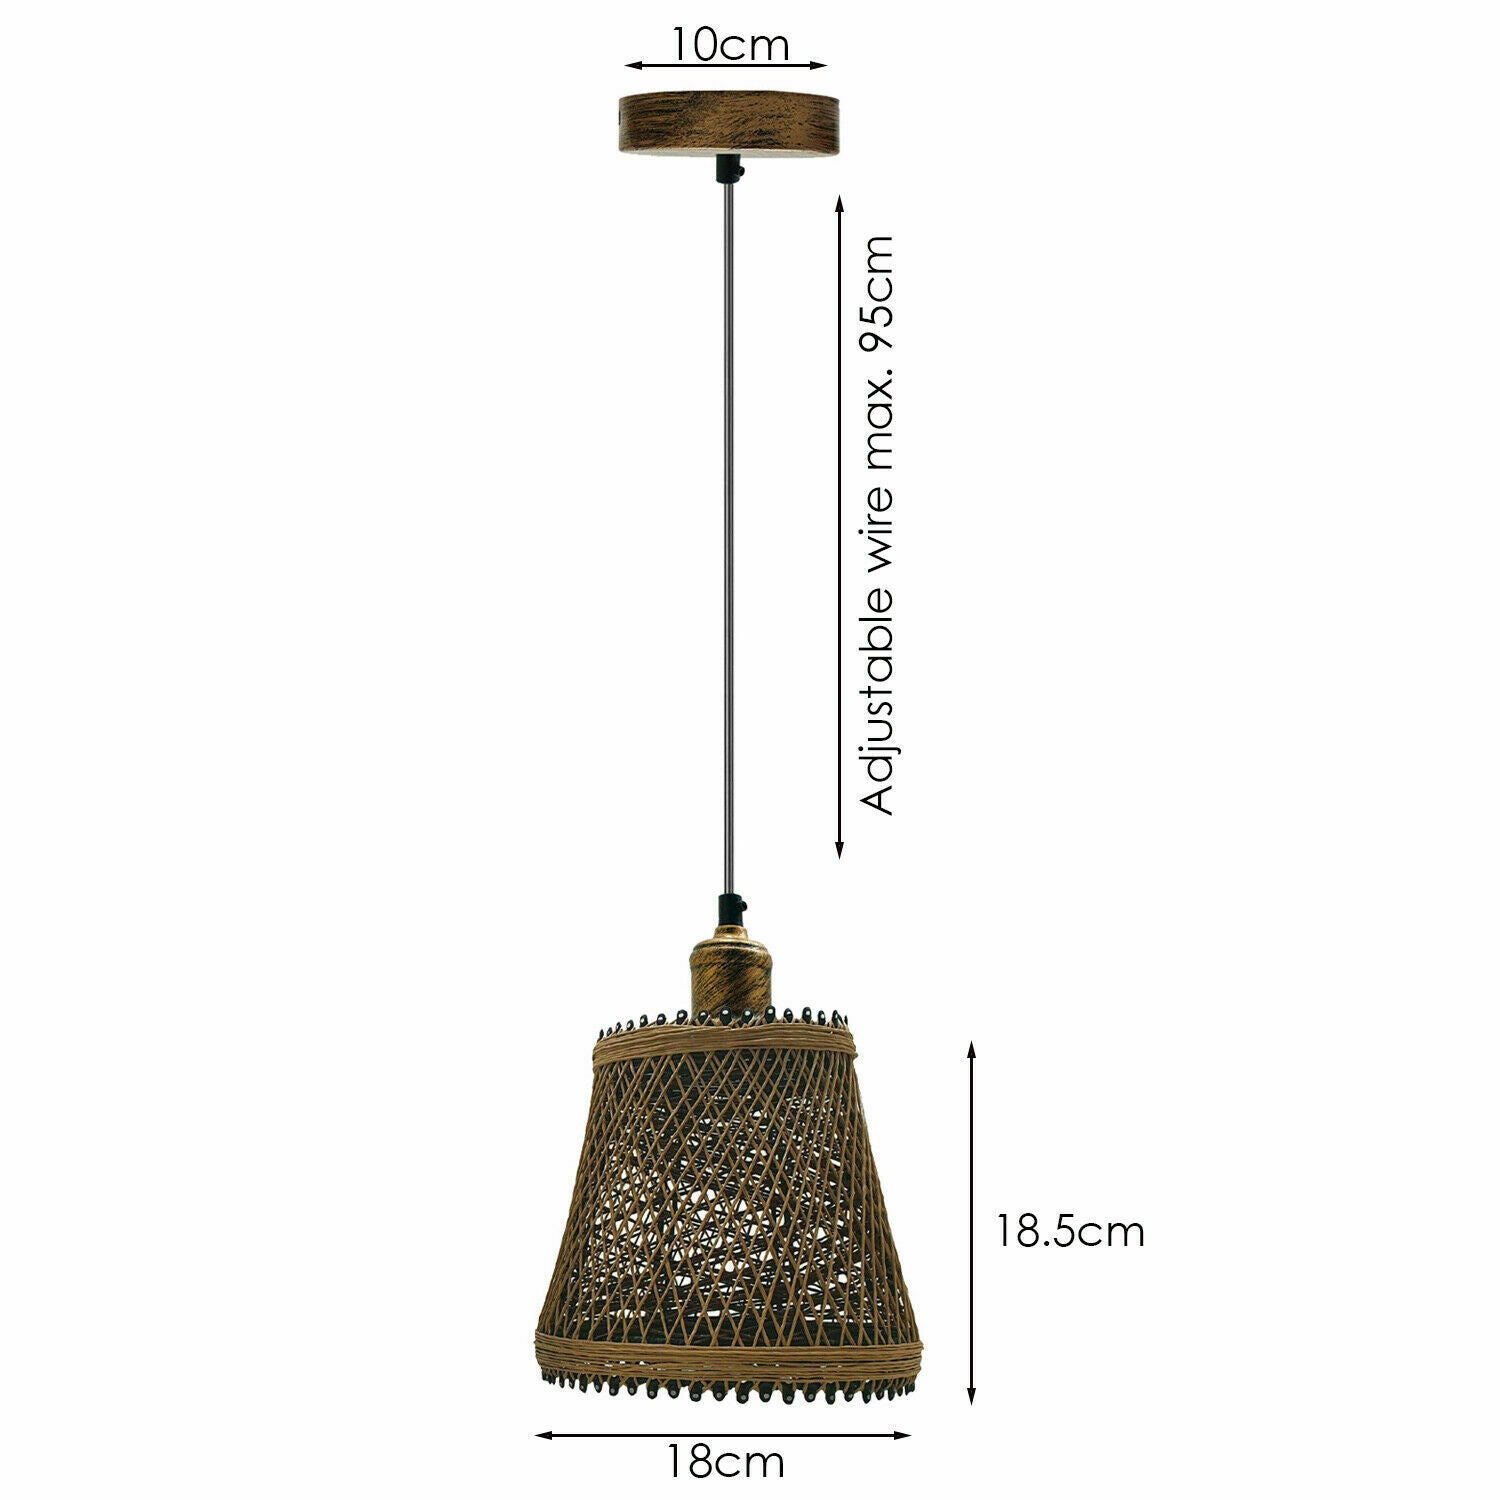 Natural Rattan Wicker Ceiling Pendant Light Lampshade Metal Pendant Lighting Kit - Basket Shape~1562 - LEDSone UK Ltd